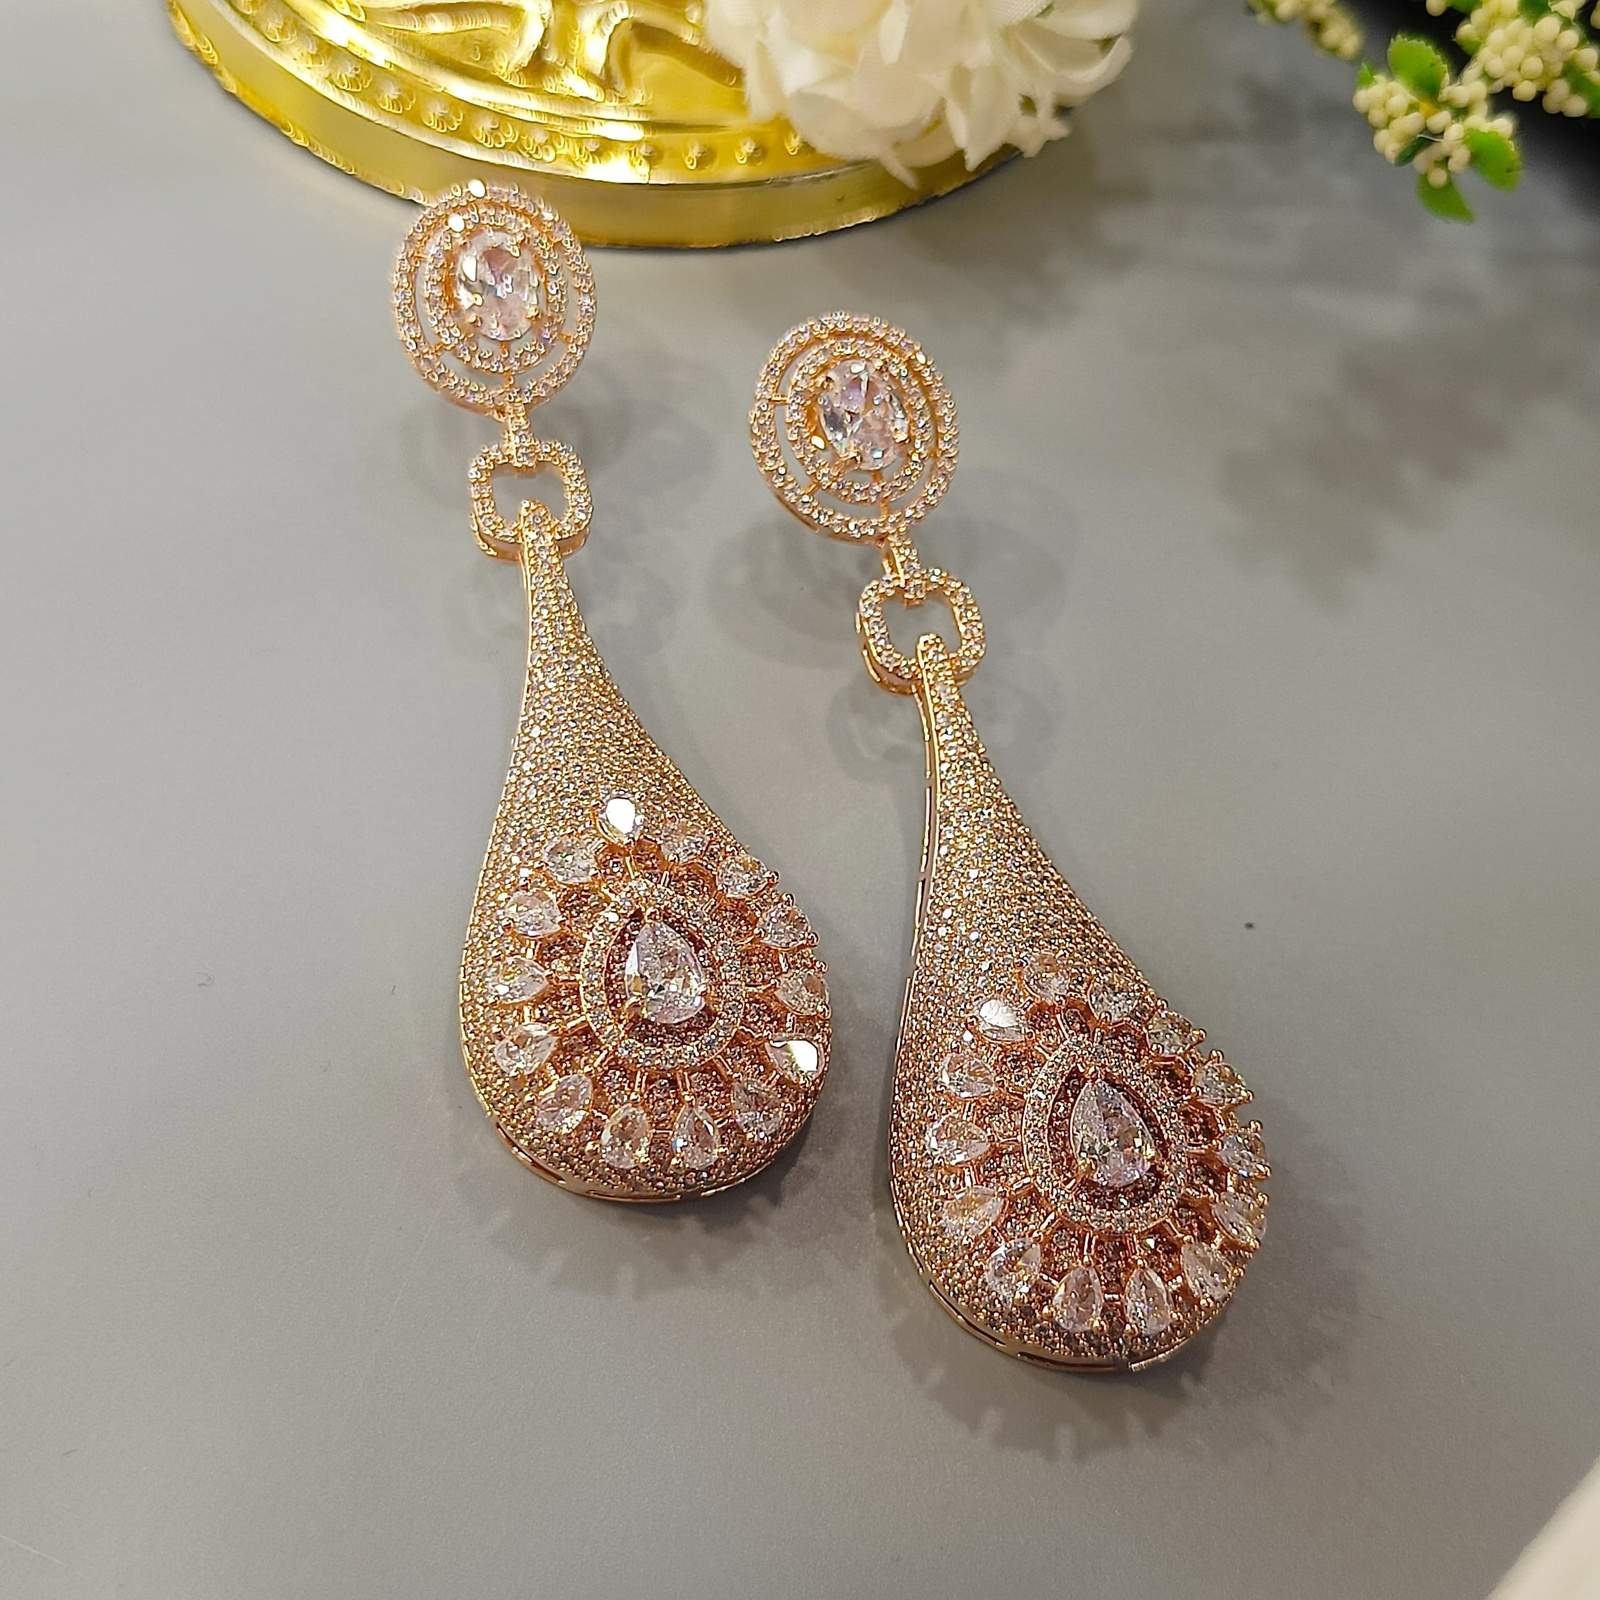 Ad alma earrings